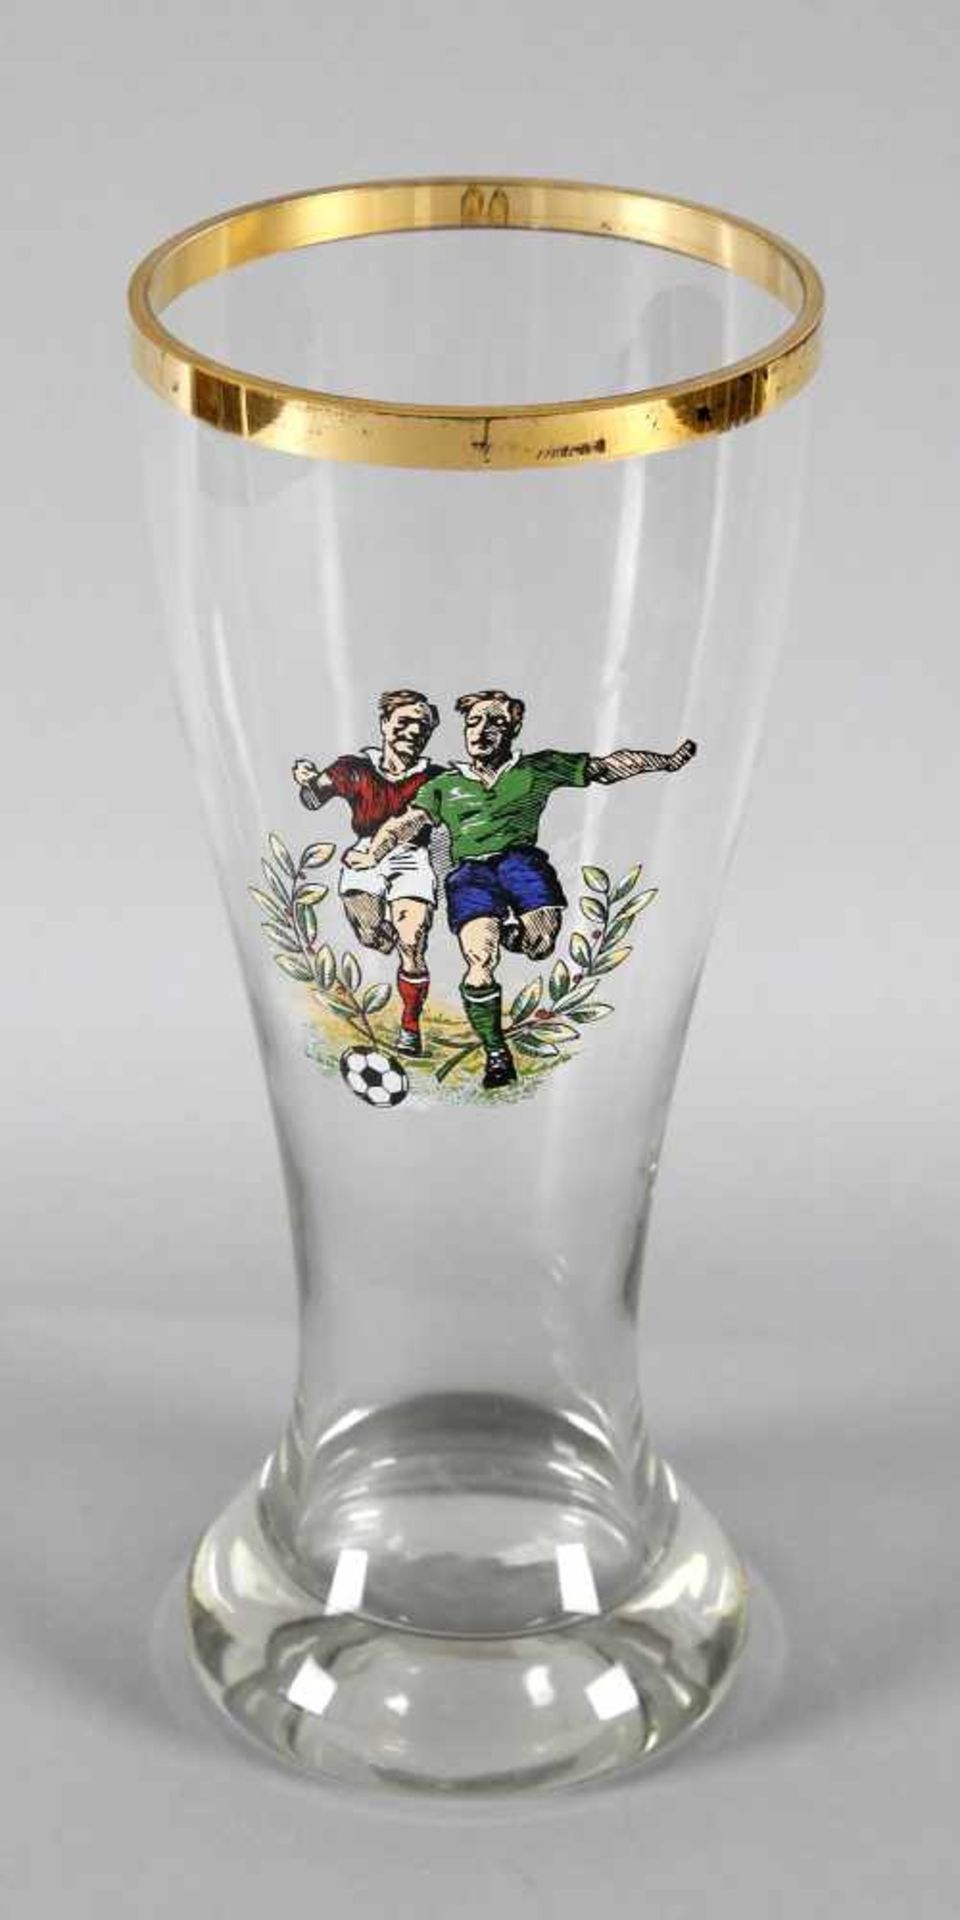 Großes Bierglas mit Fußballermotiv, 2. Hälfte 20. Jh.farbloses Glas mit Goldrand, Motiv polychrom,